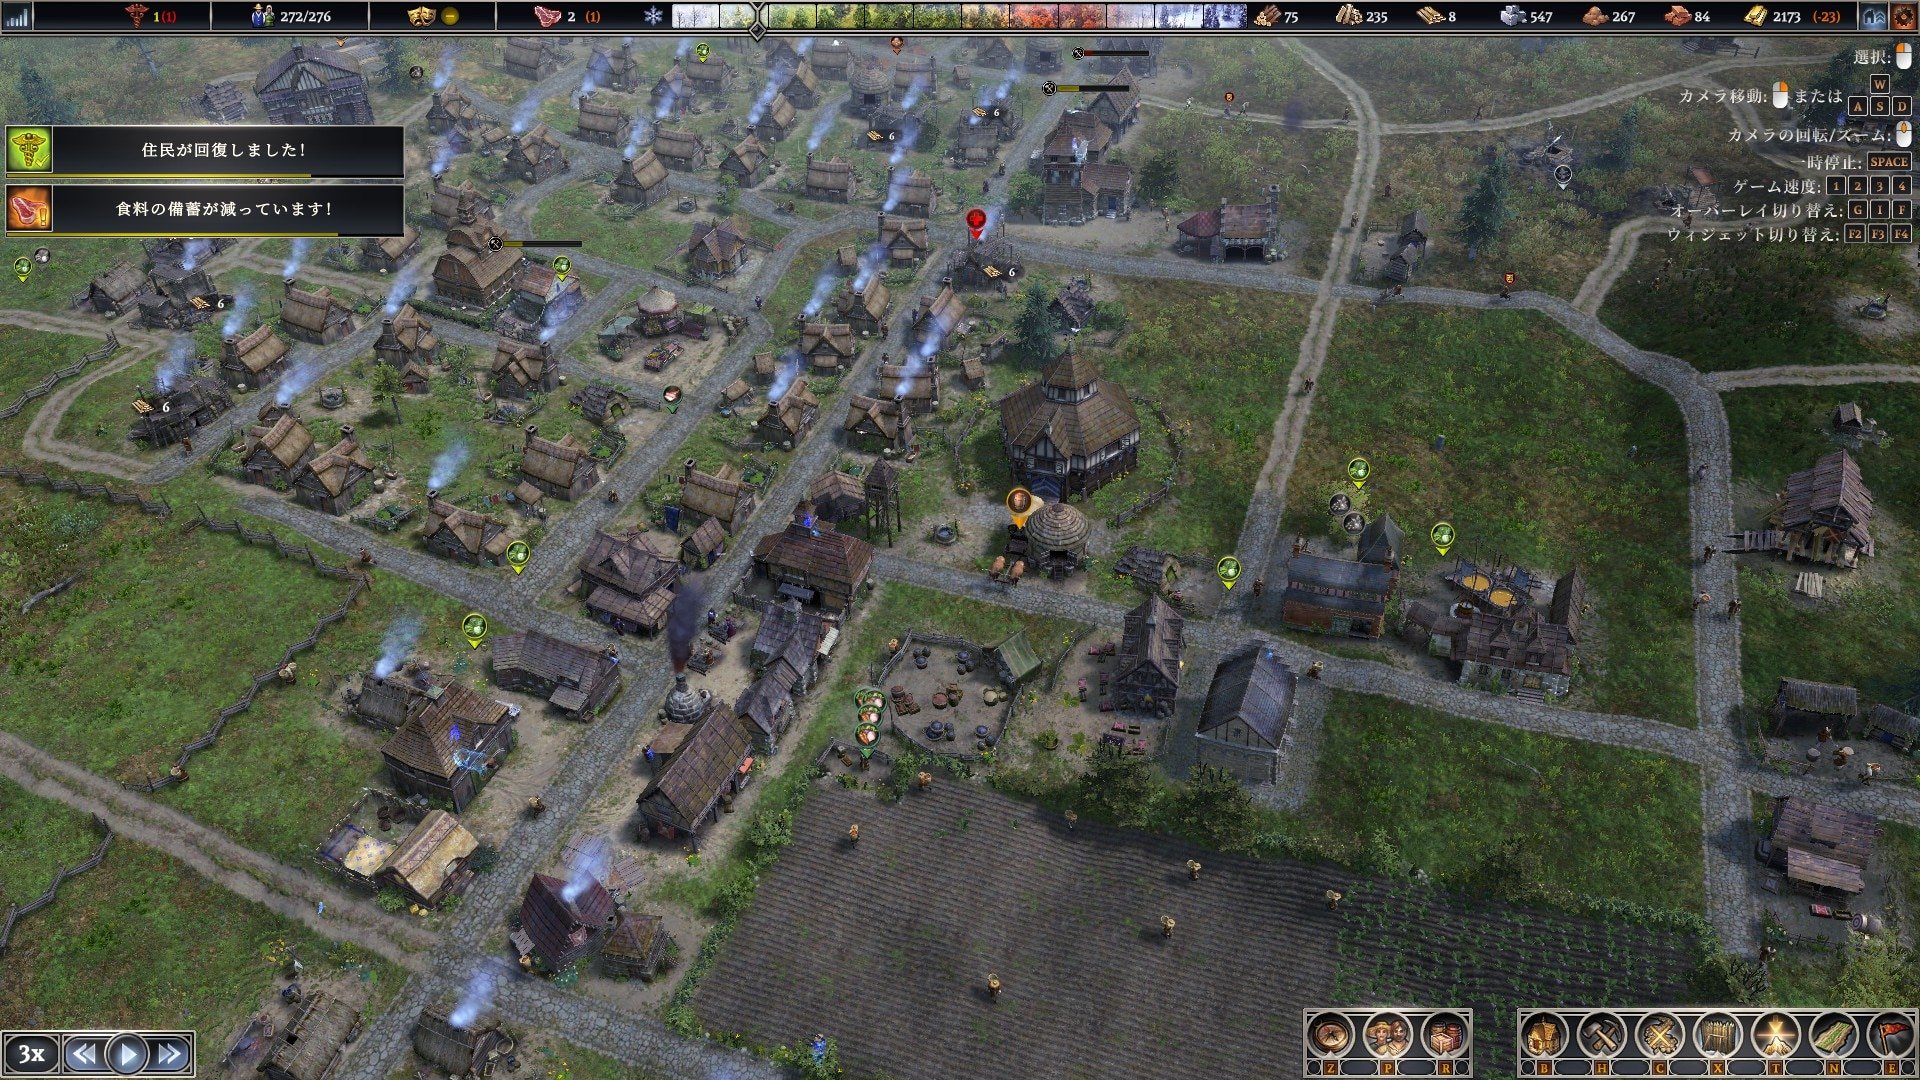 Скриншот 2 к игре Farthest Frontier (Early Access) PC | Лицензия